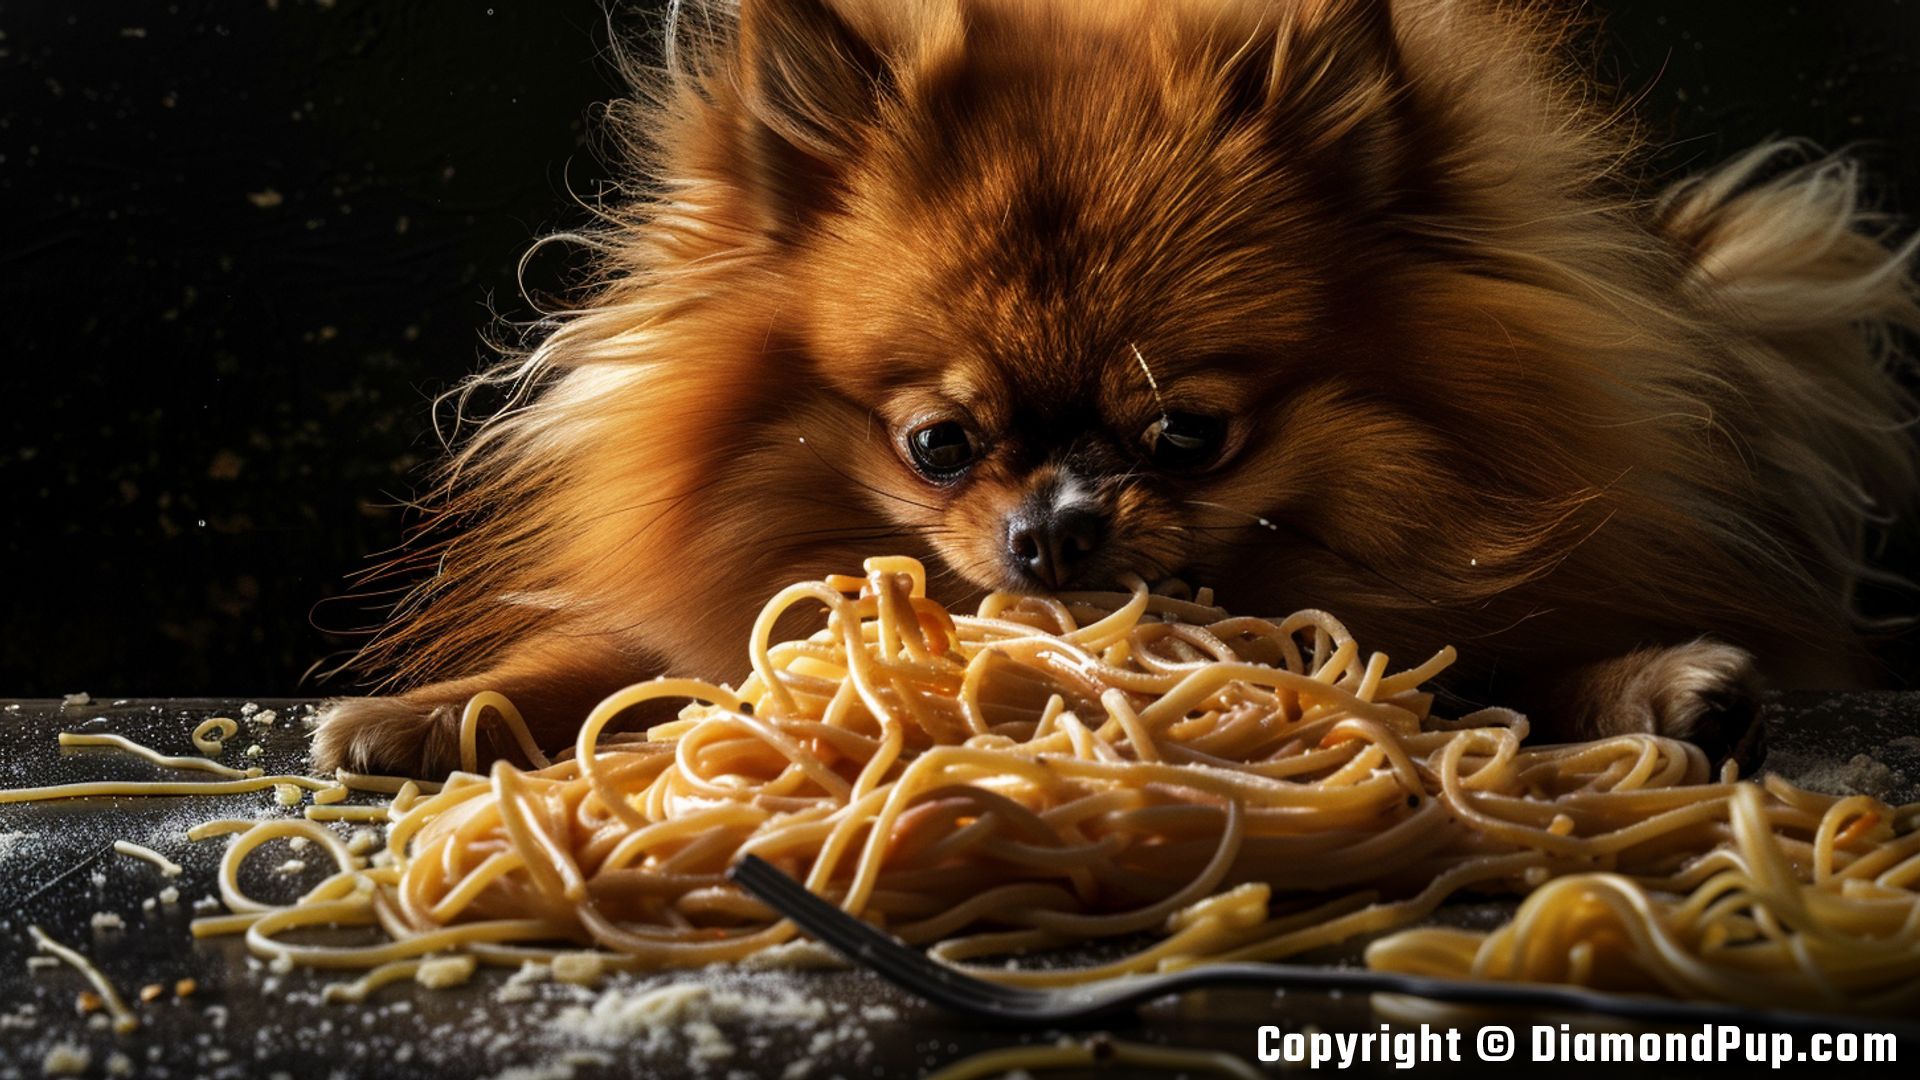 Image of a Playful Pomeranian Eating Pasta